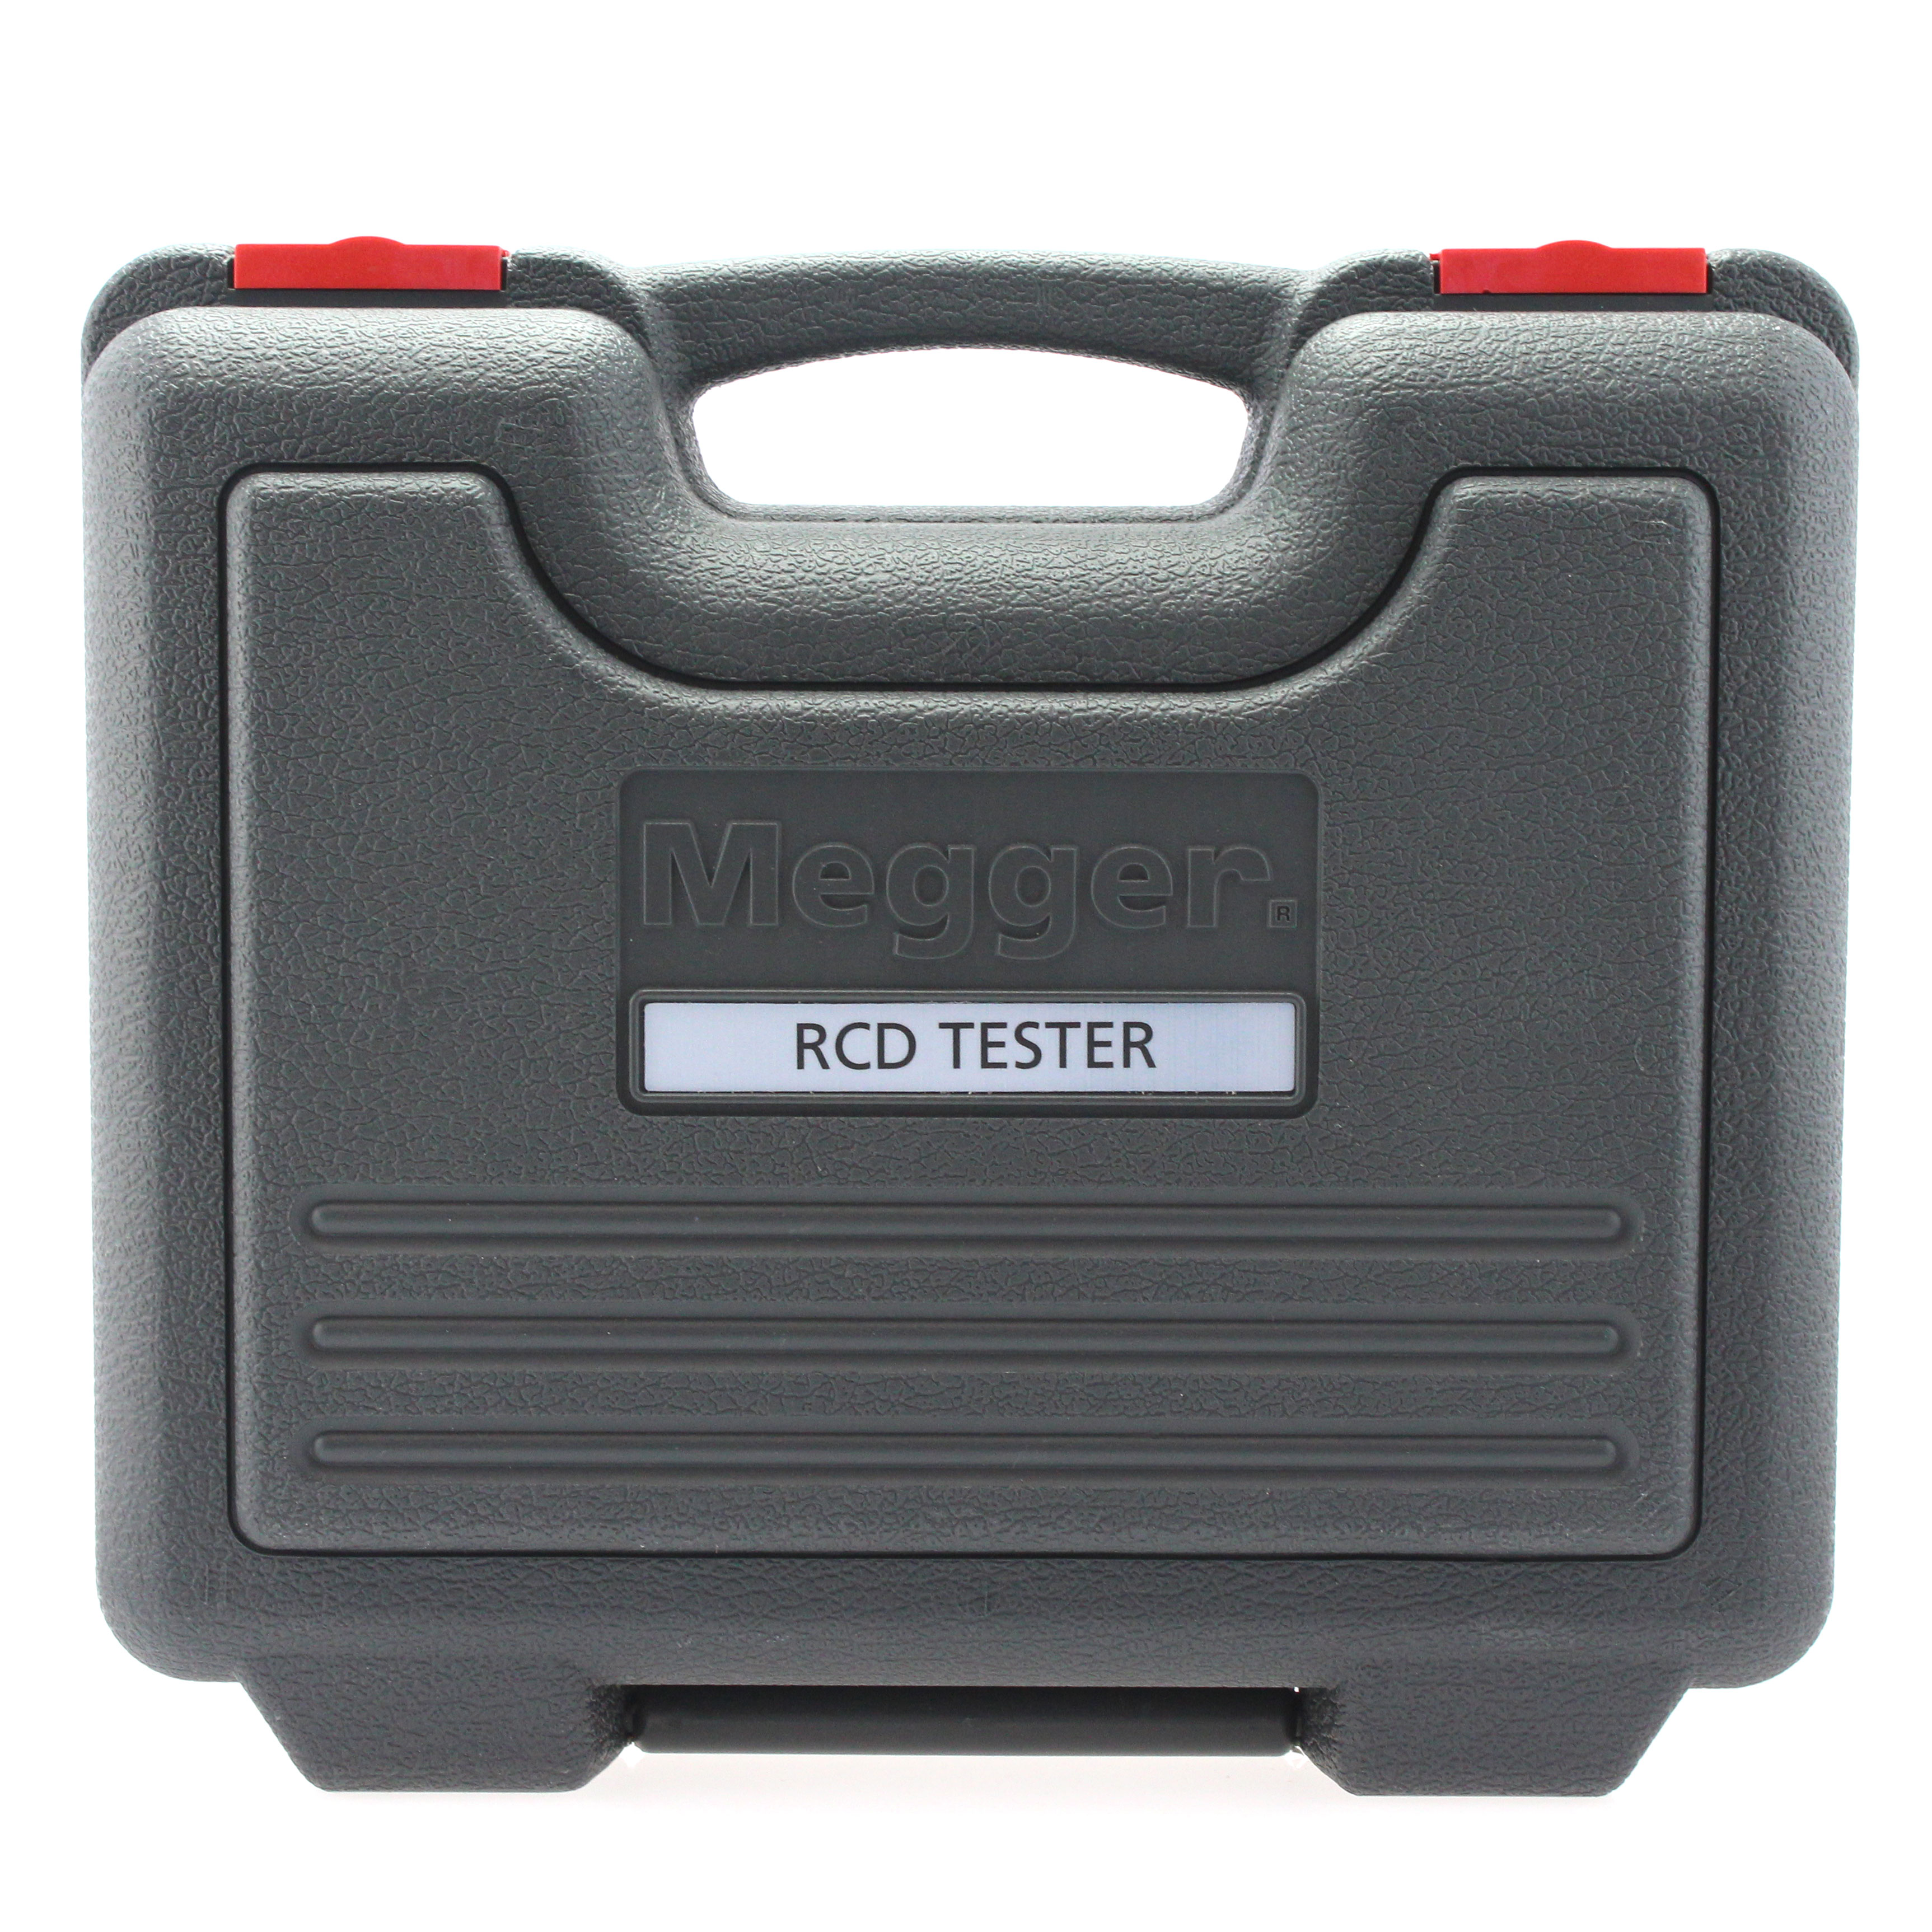 Megger RCD Tester Hard Carry Case